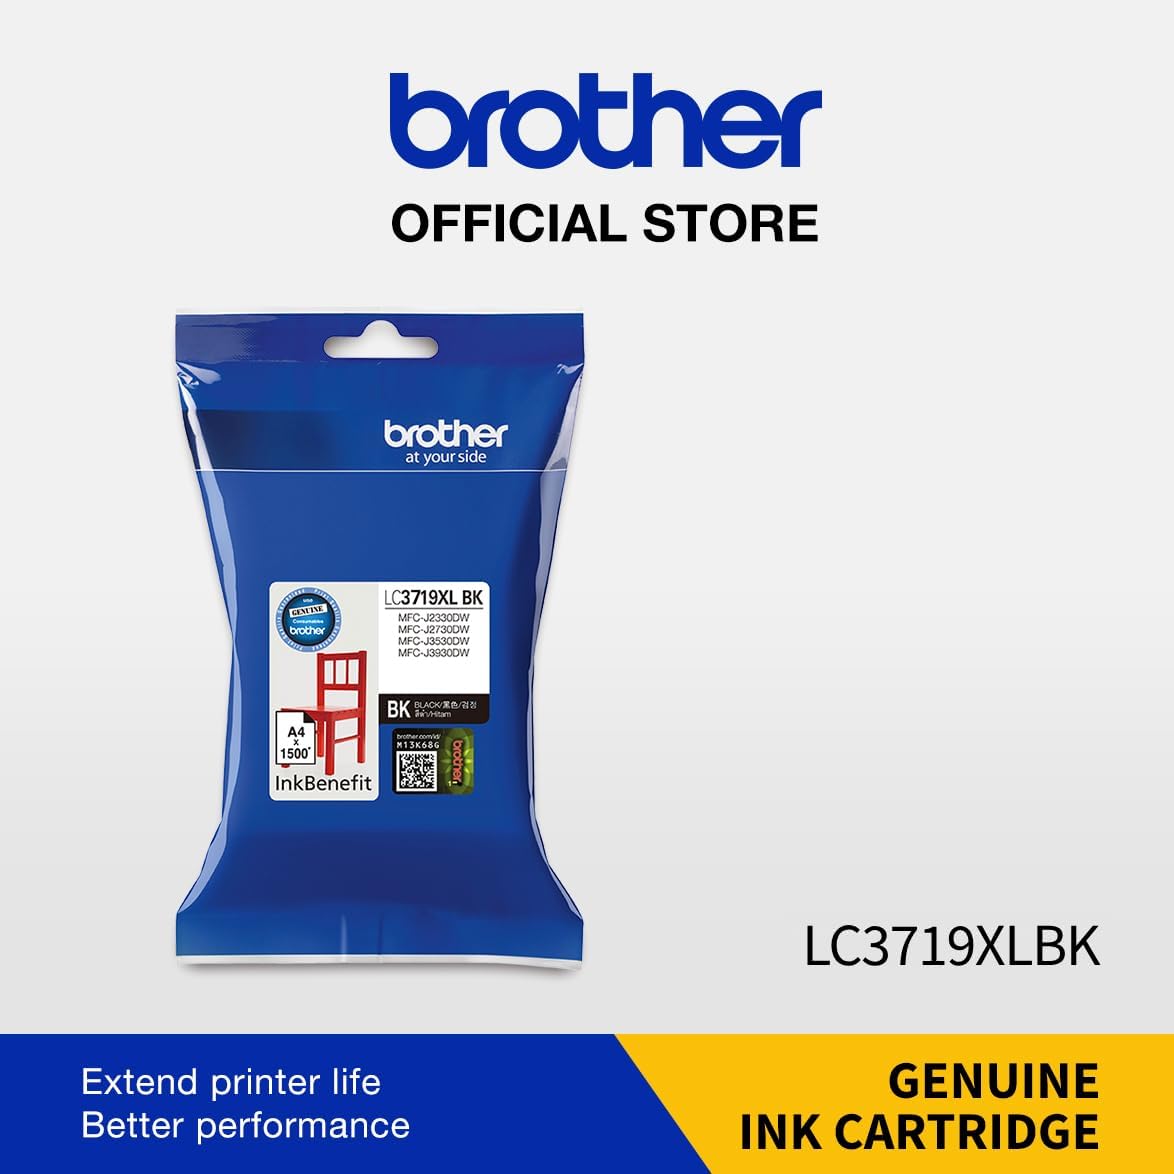 BROTHER INK CARTRIDGE BLACK. MFC-J2330DW - high yield LC3719XLBK